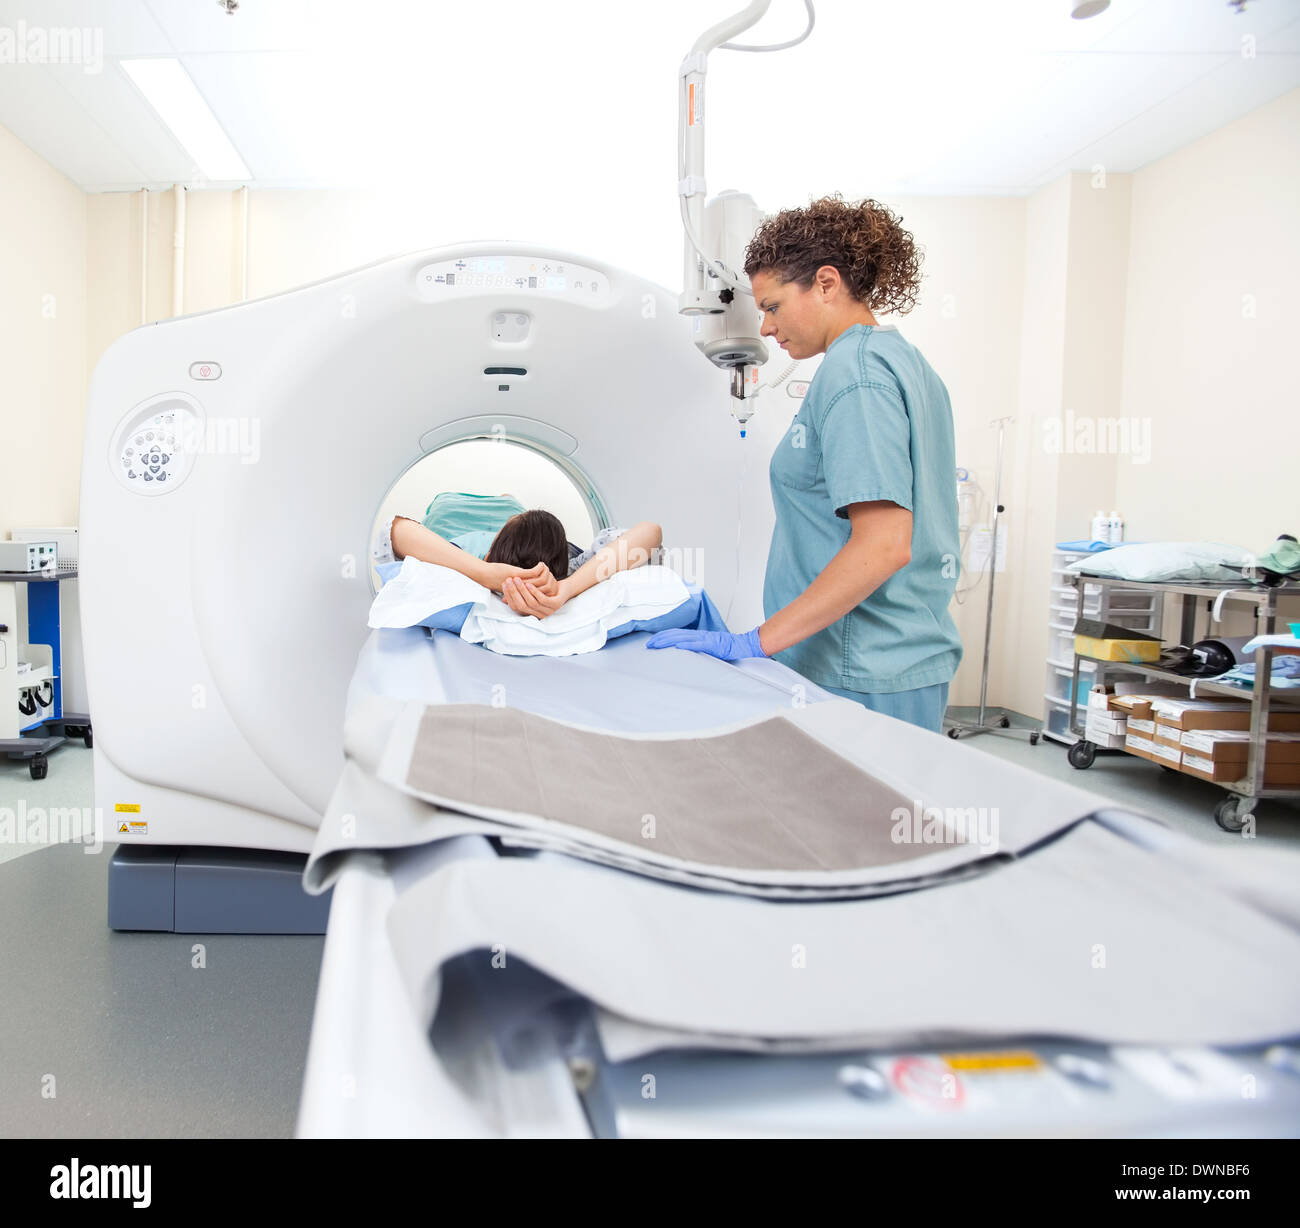 Patient Undergoing CT Scan Test Stock Photo - Alamy